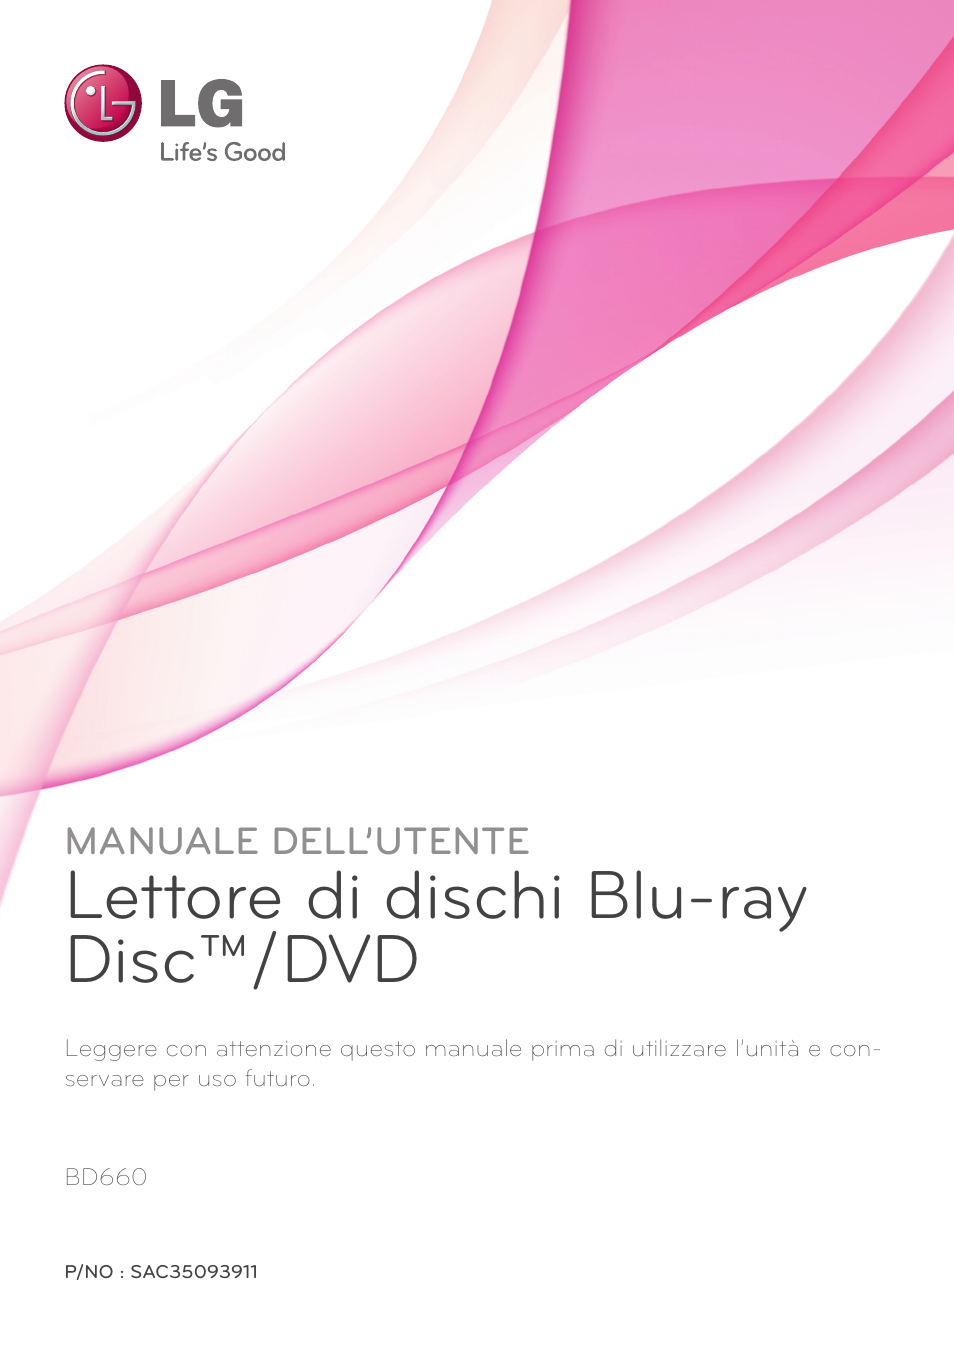 LG BD660 Manuale d'uso | Pagine: 56